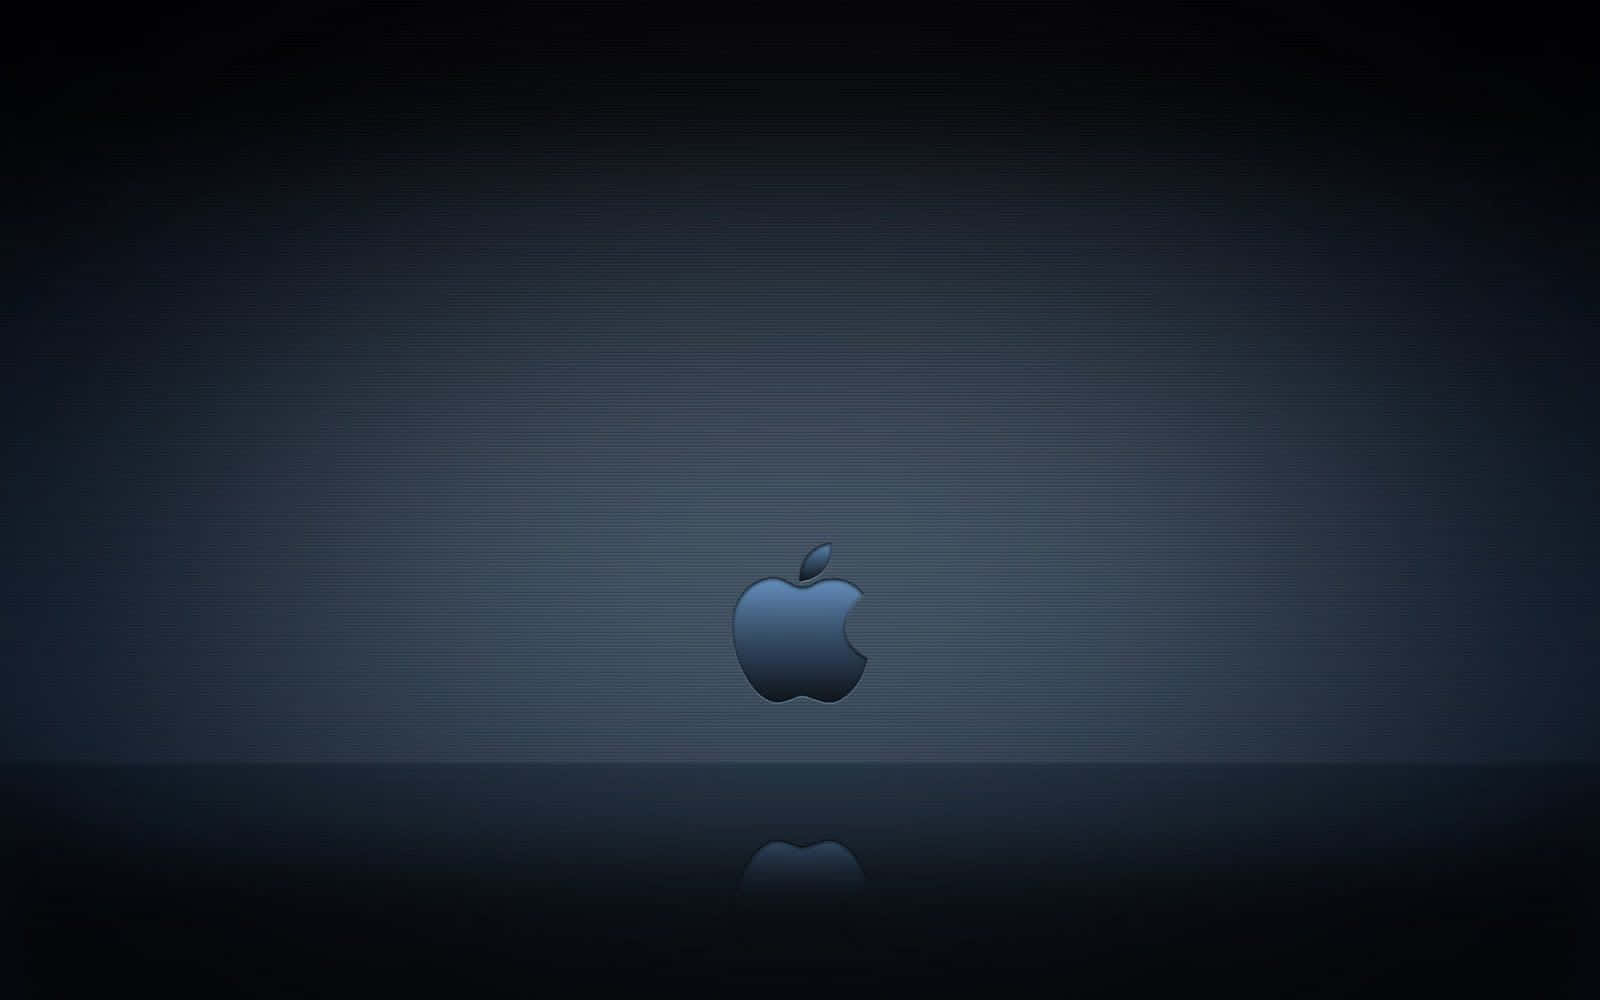 A Desktop Mac Computer Featuring Apple's Innovative Design. Background